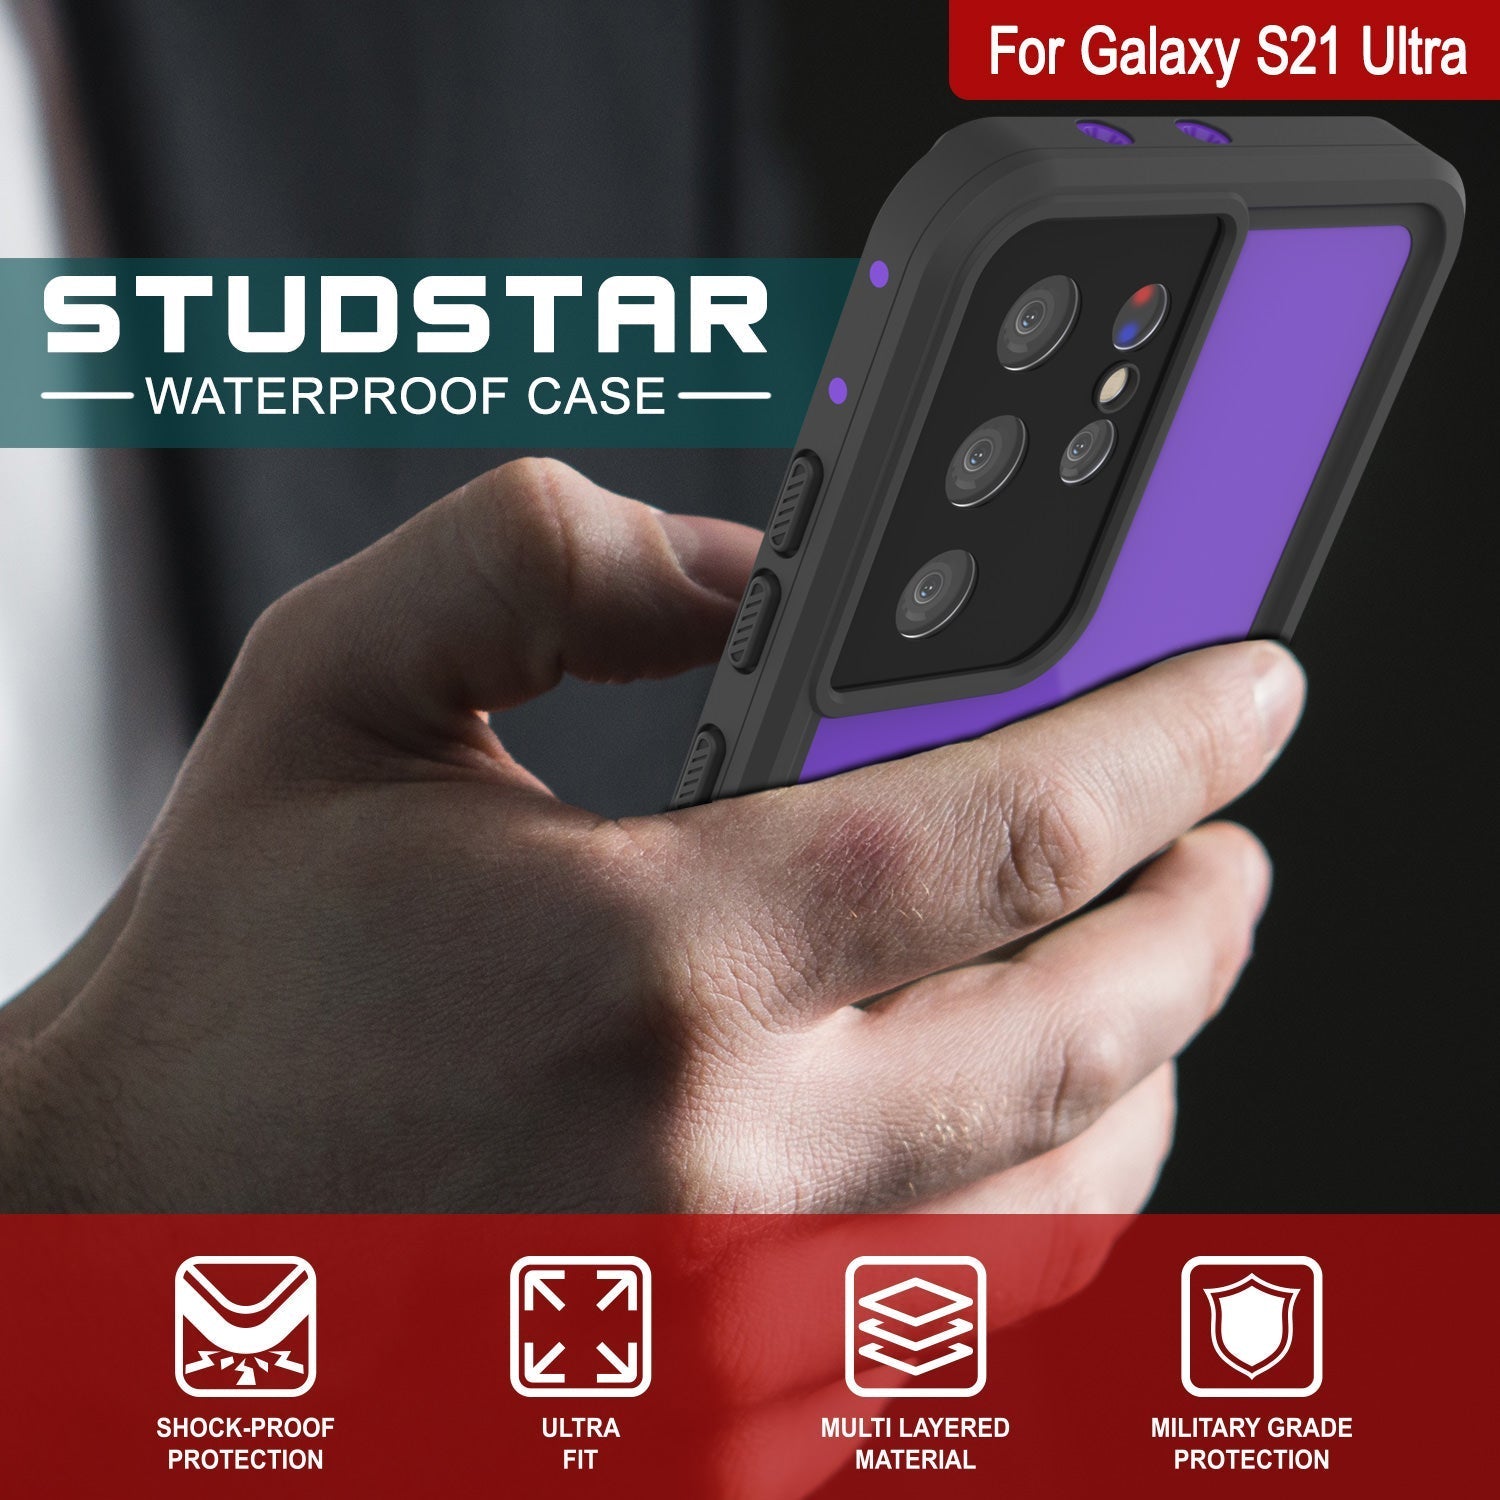 Galaxy S22 Ultra Waterproof Case PunkCase StudStar Purple Thin 6.6ft Underwater IP68 Shock/Snow Proof